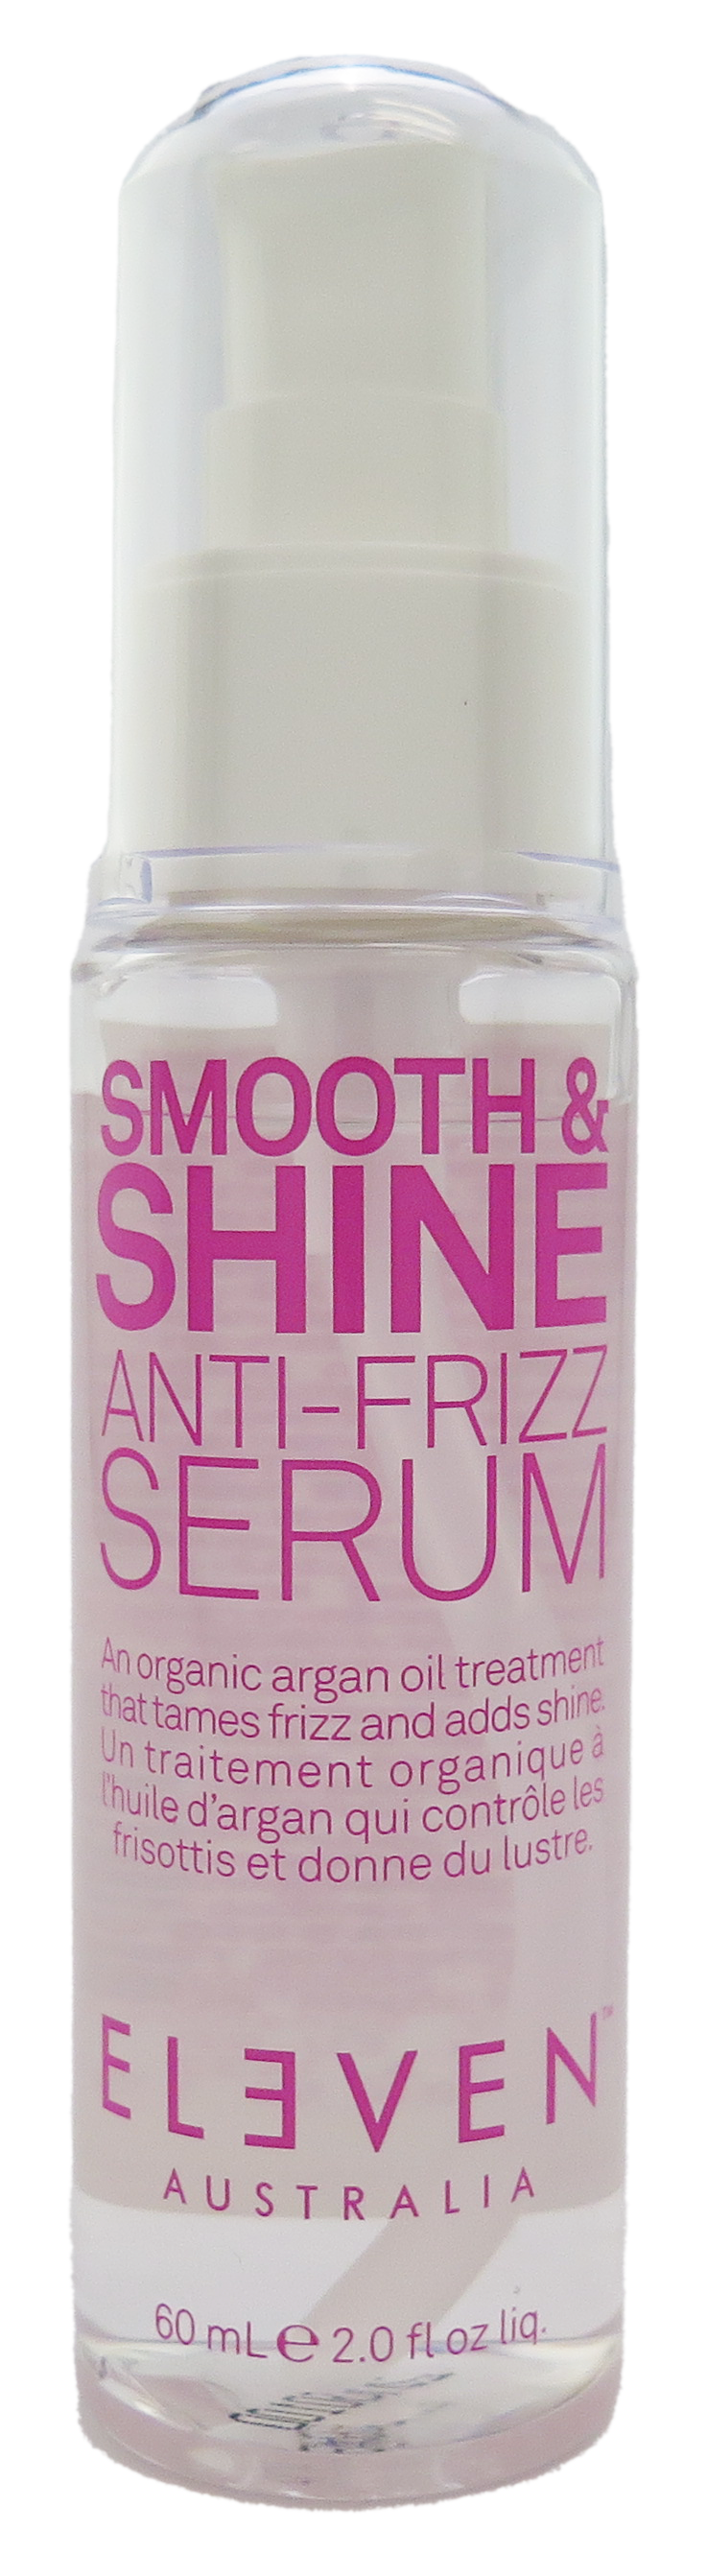 Eleven Australia Smooth & Shine Anti-Frizz Serum 2.0 fl oz